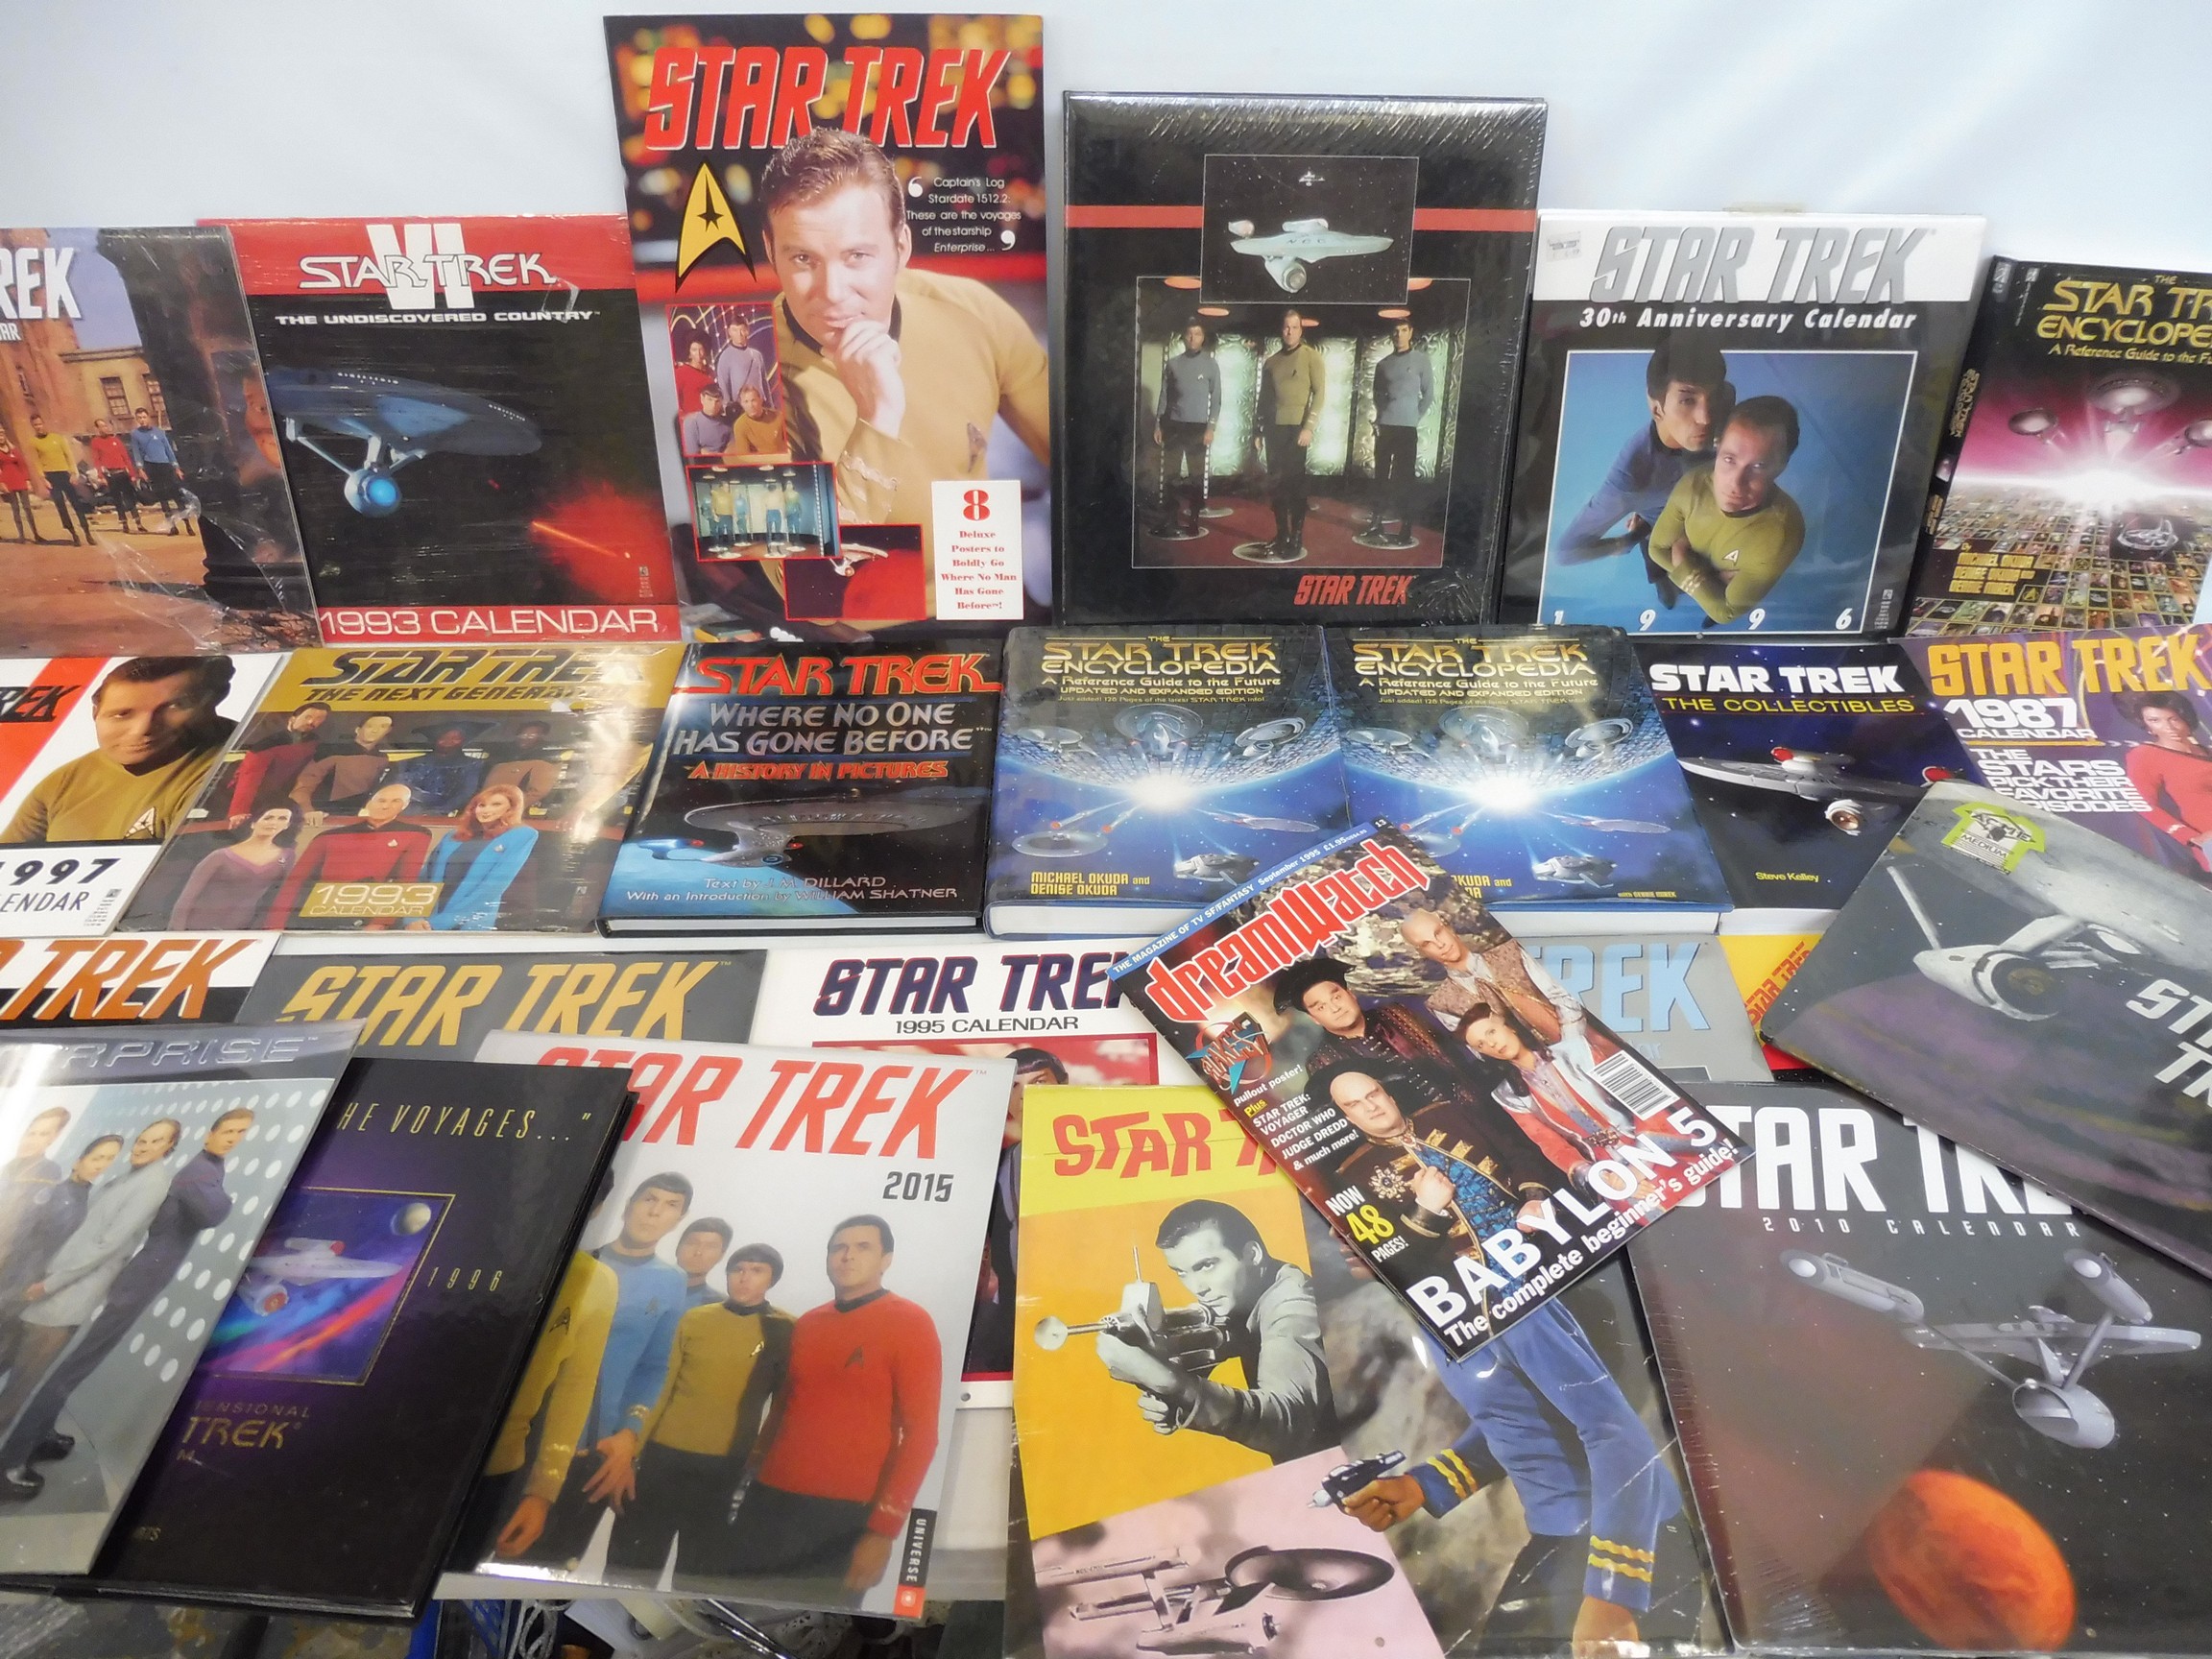 A box of Star Trek merchandise, books etc.,